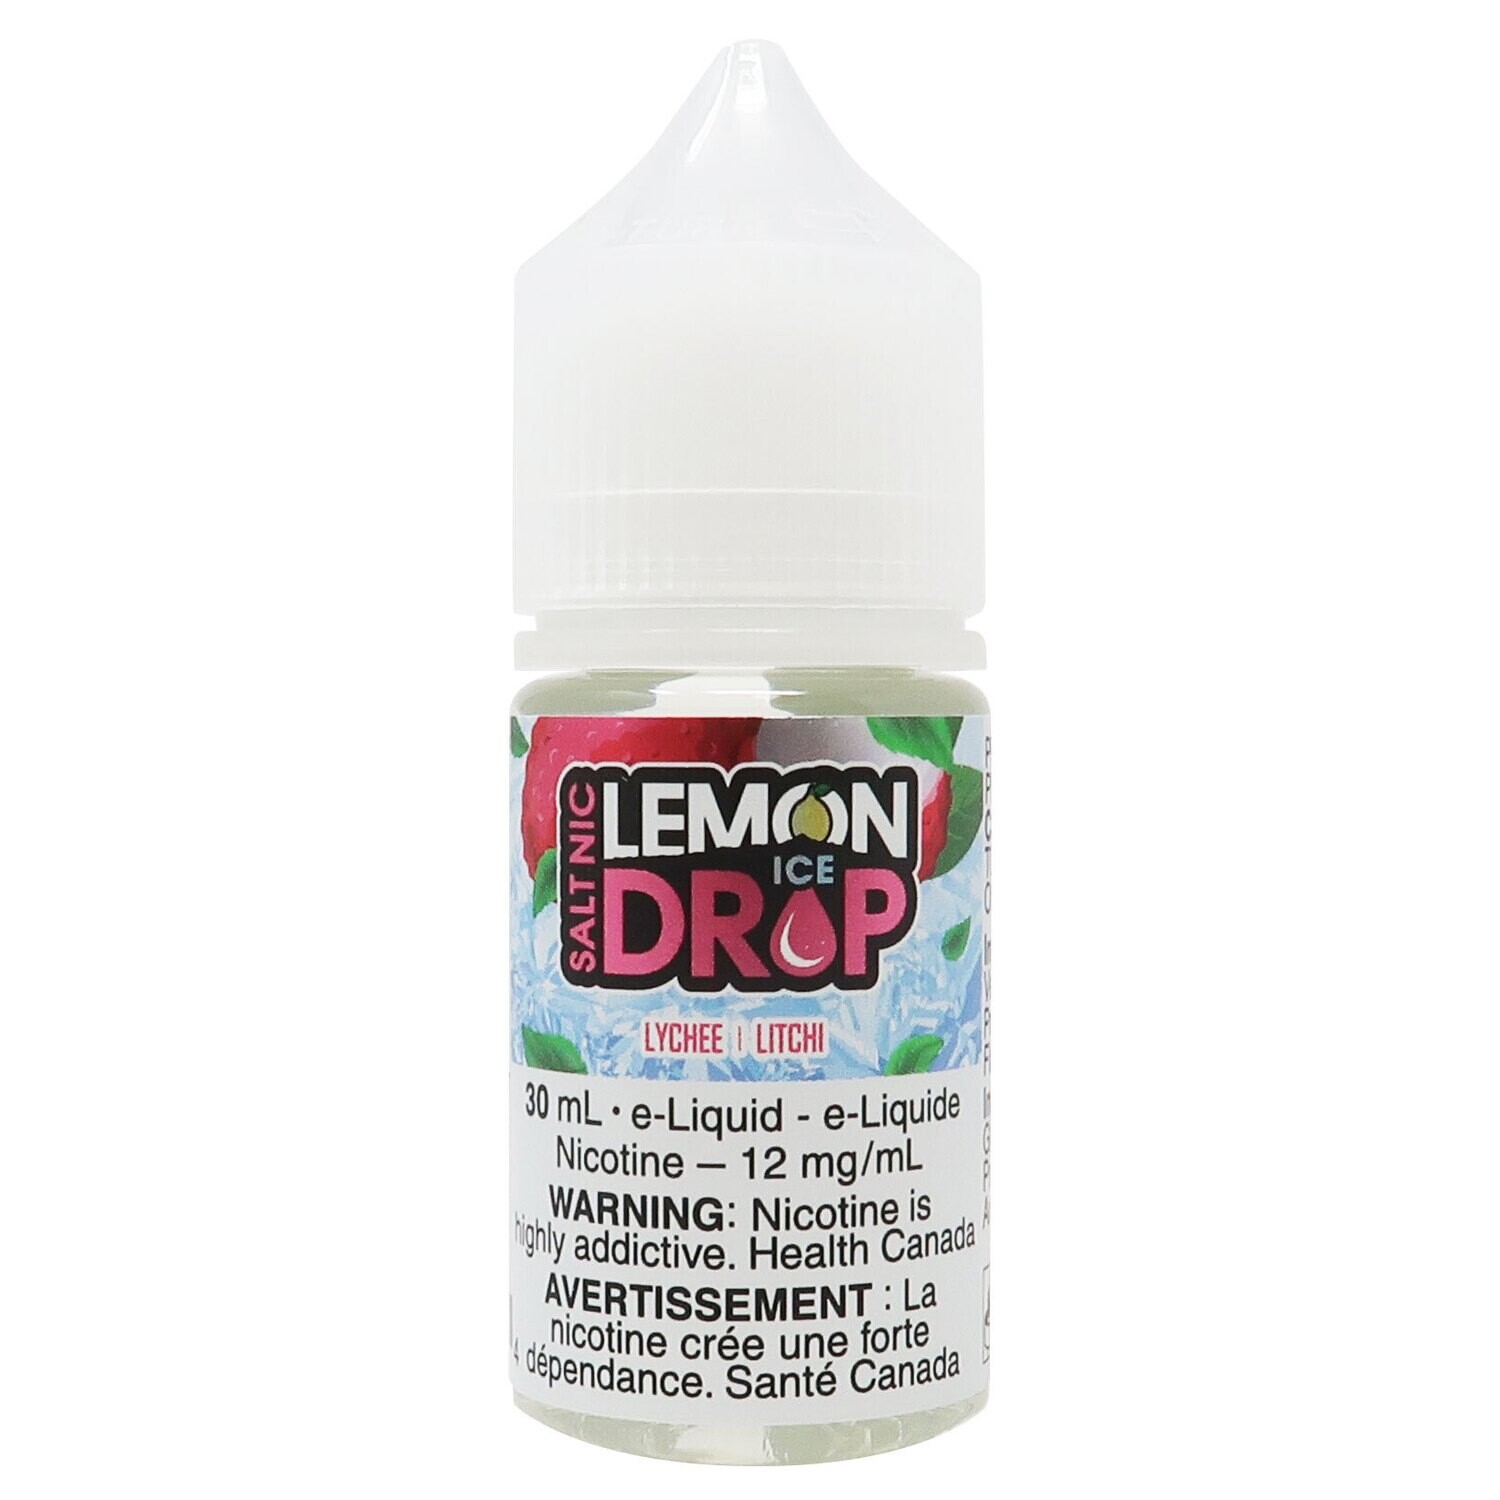 Lemon Drop Salt ICE - Lychee (30ml) Eliquid